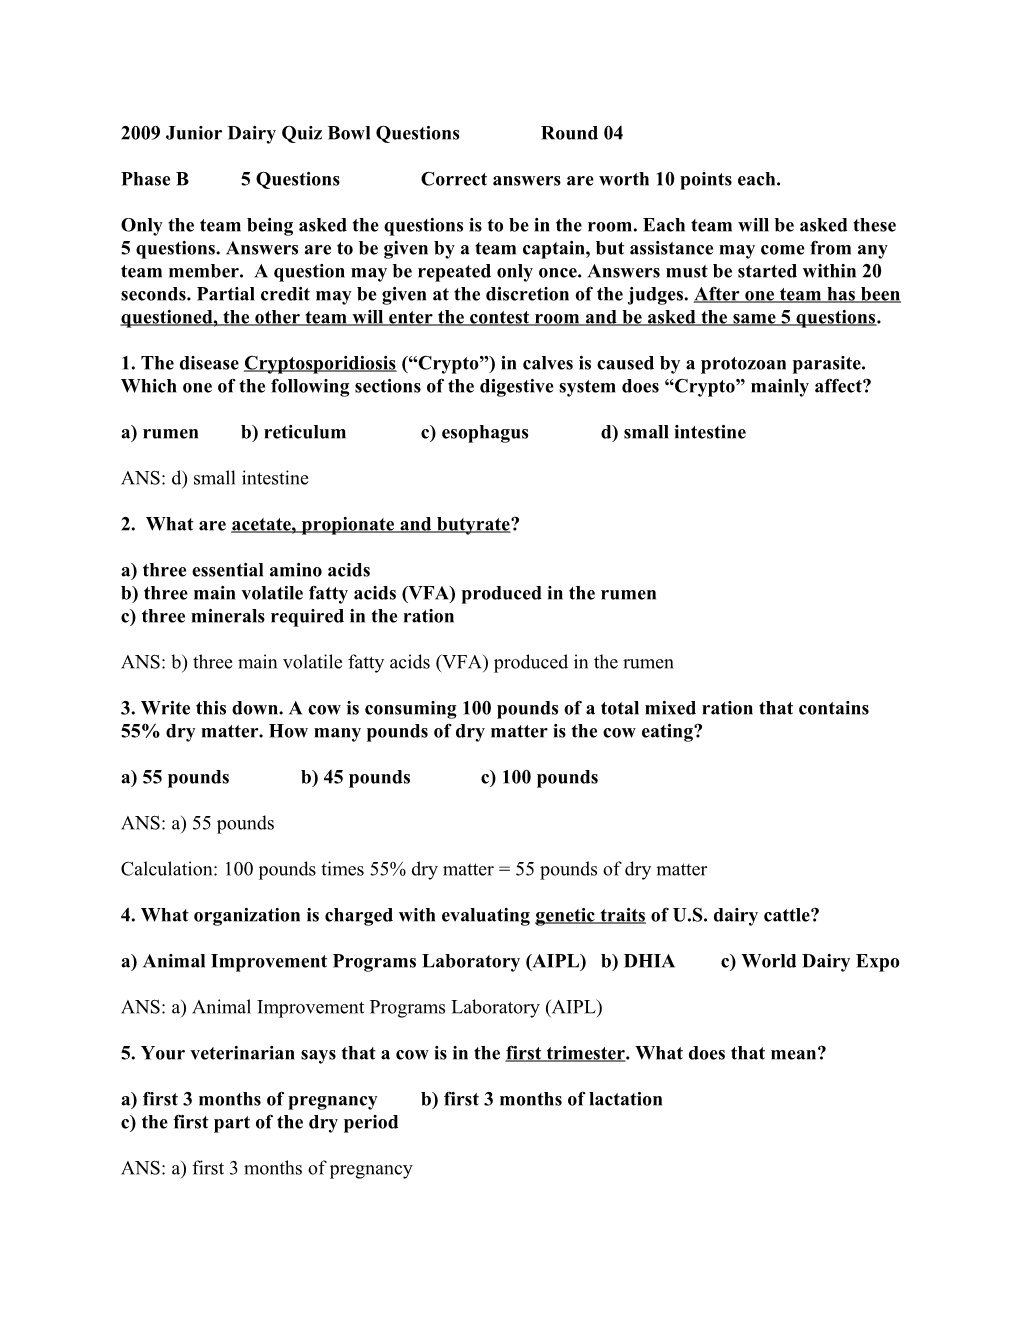 2005 Junior Dairy Quiz Bowl Questions s1